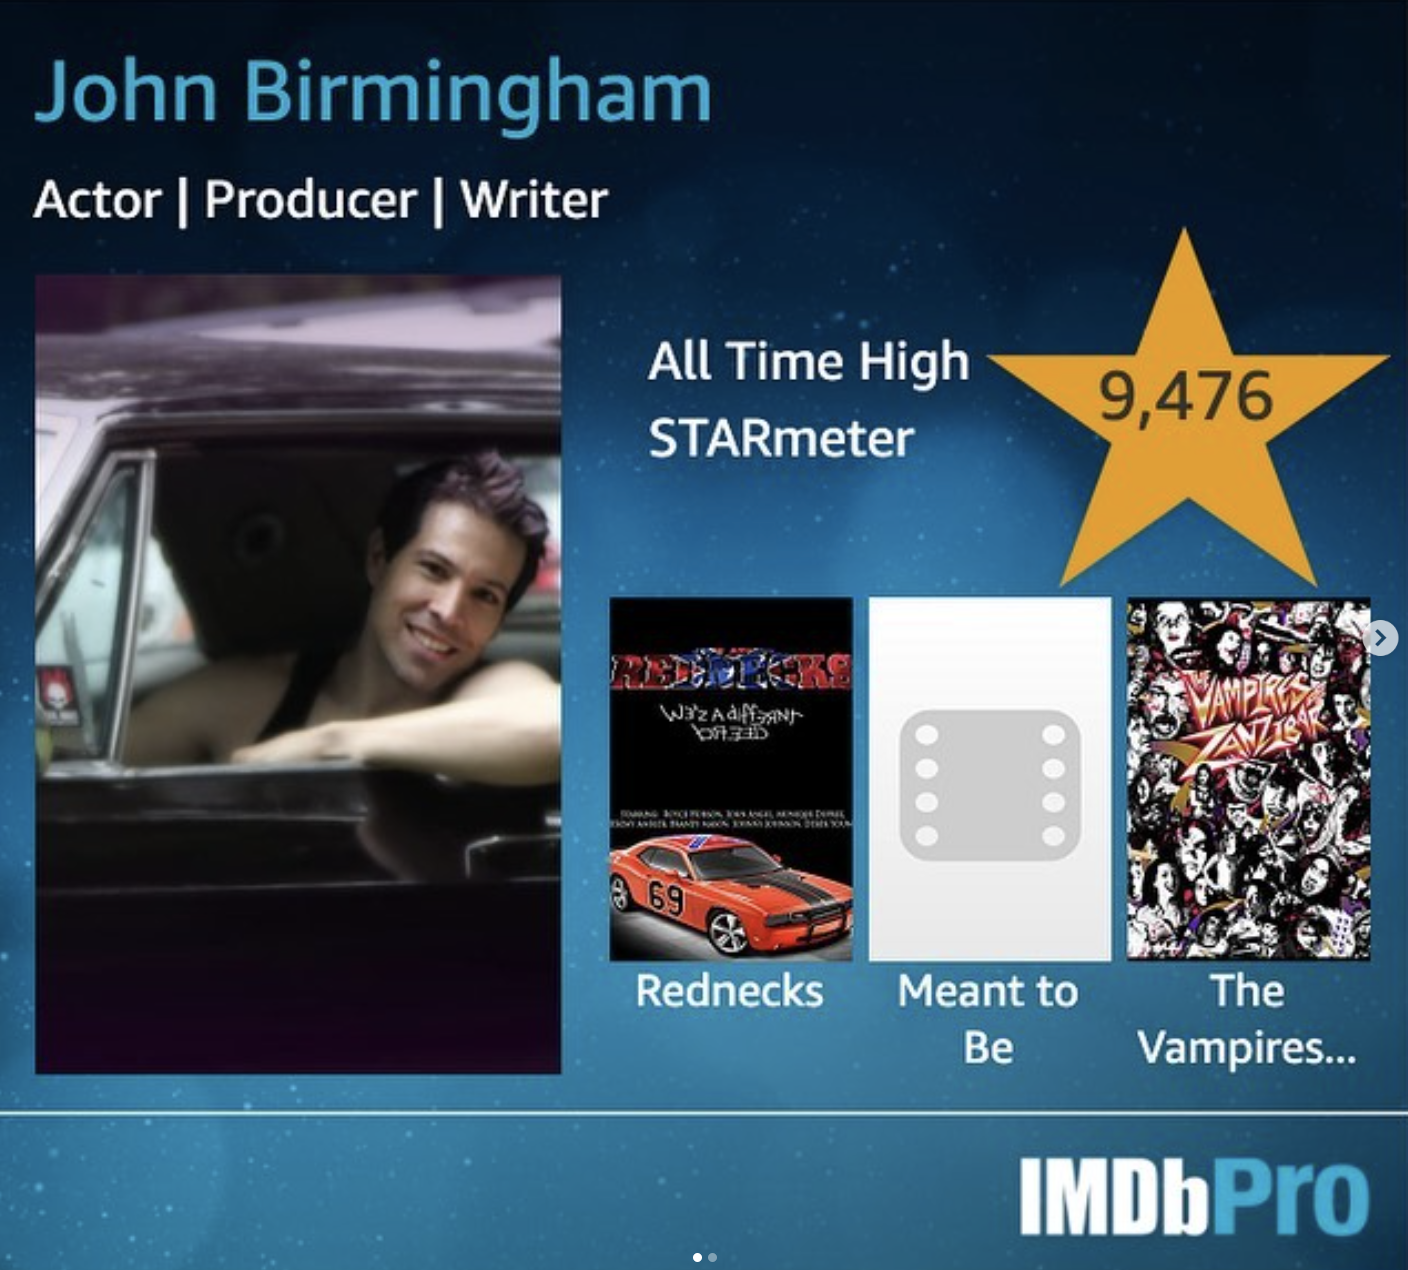 John Birmingham's IMDb paage